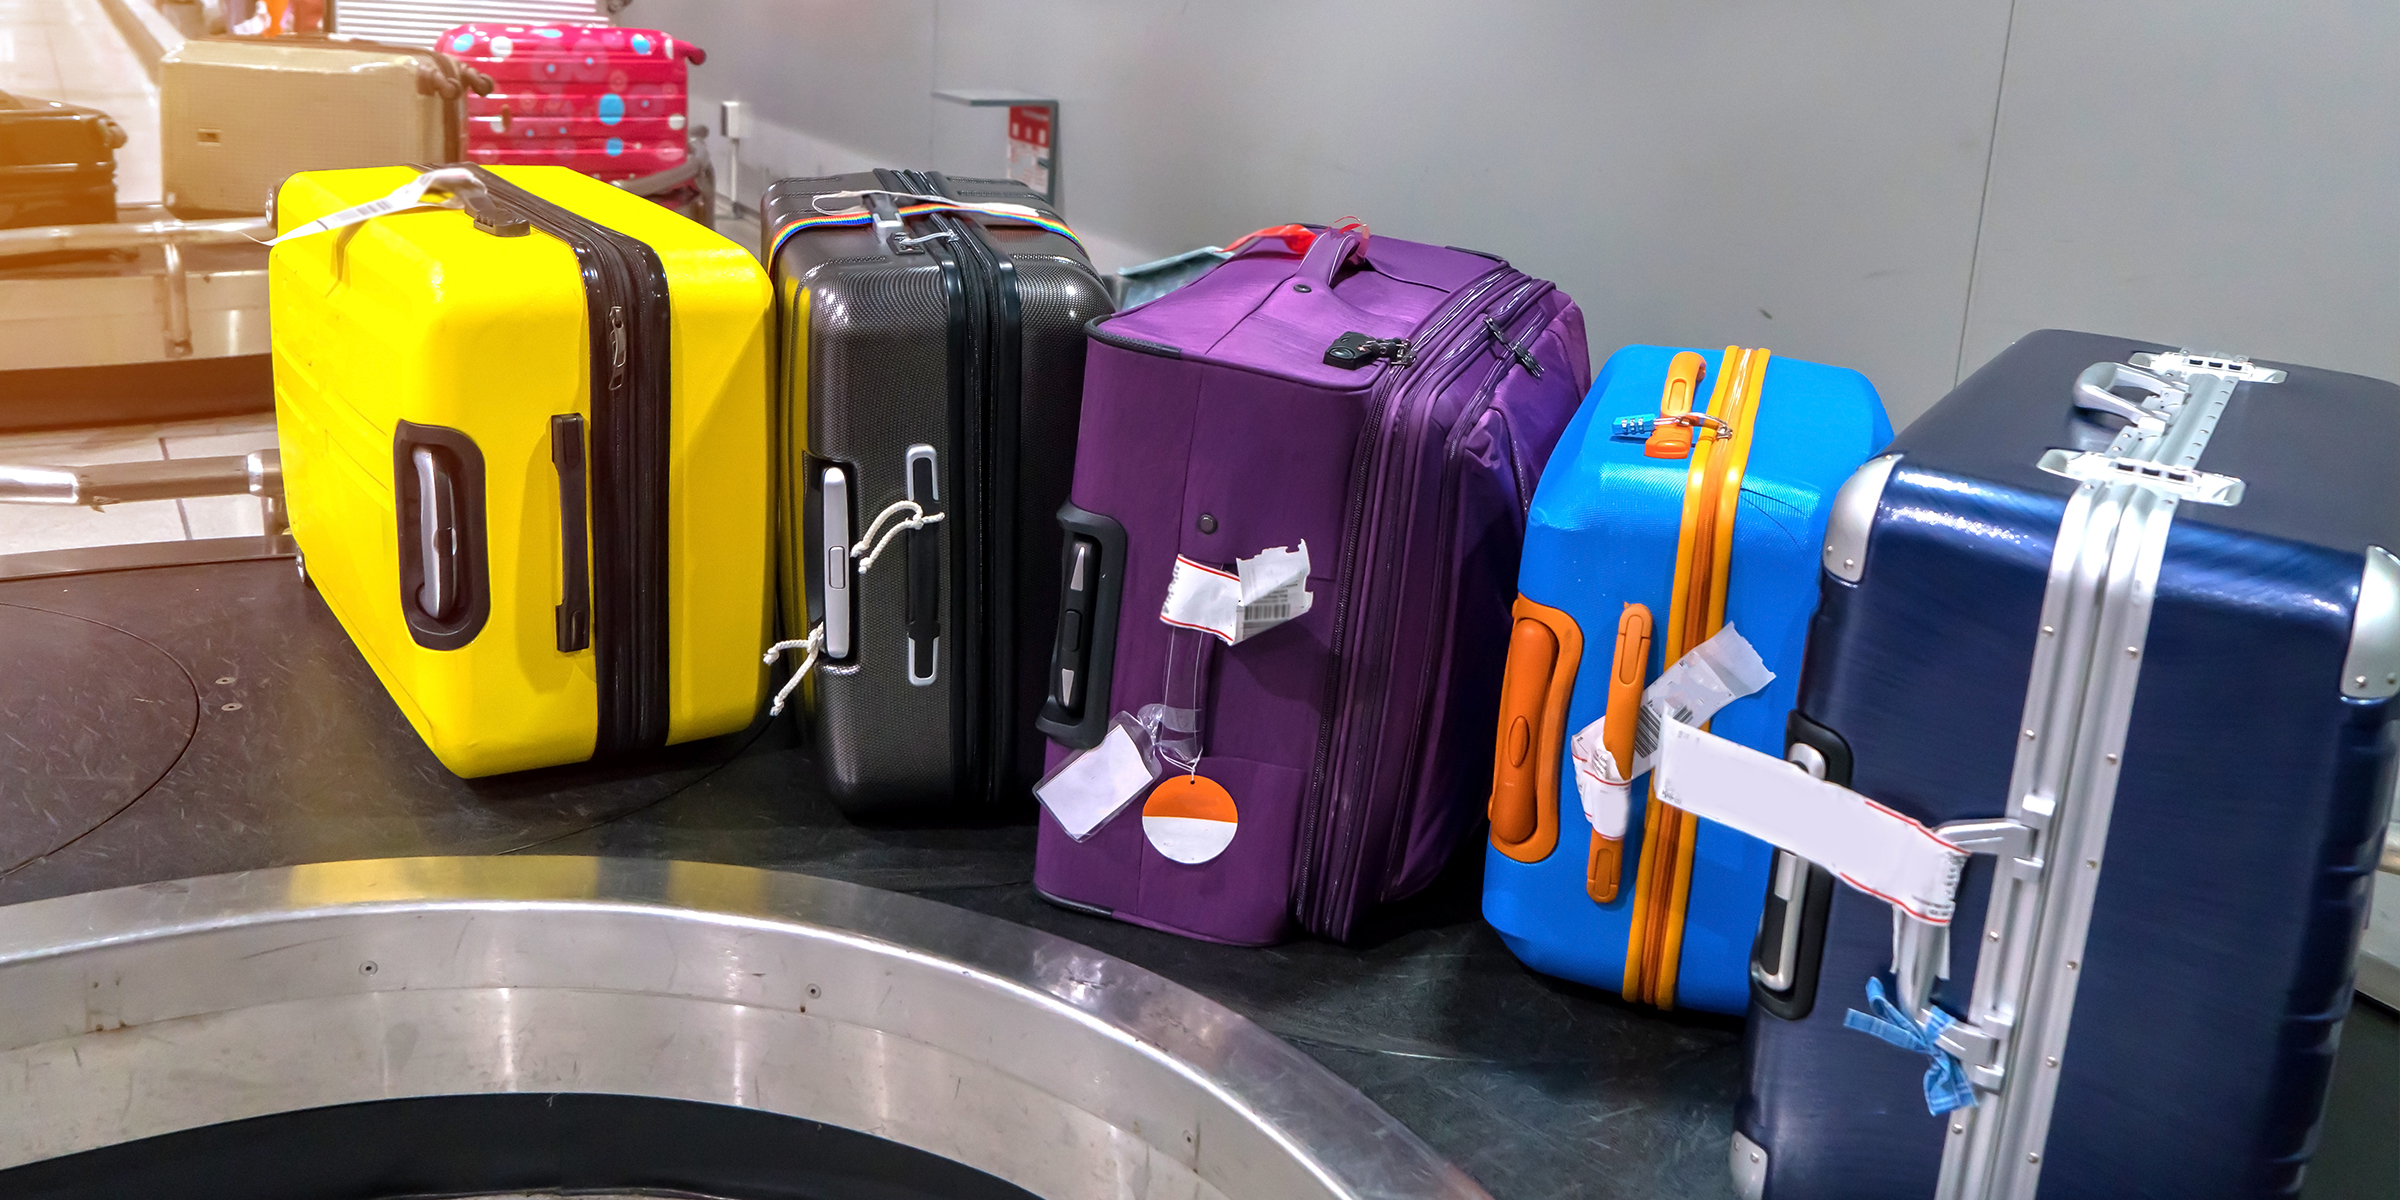 Several travel bags on a conveyor belt | Source: Shutterstock